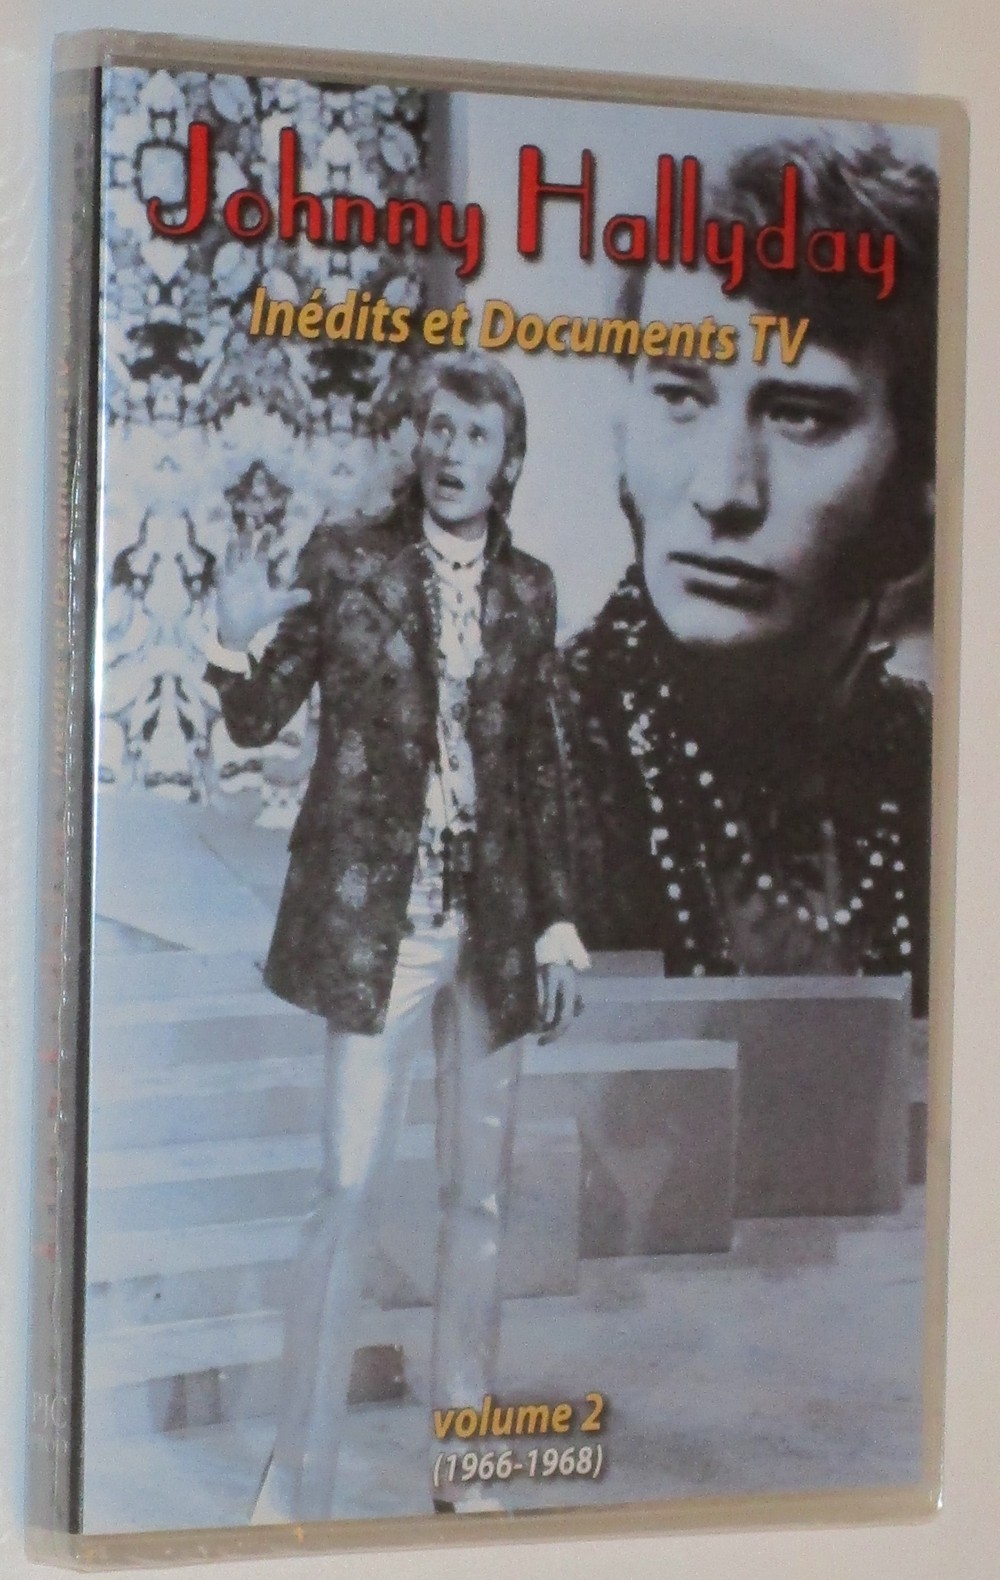 INEDITS ET DOCUMENTS TV VOL.2 (1966-68) 001-in11